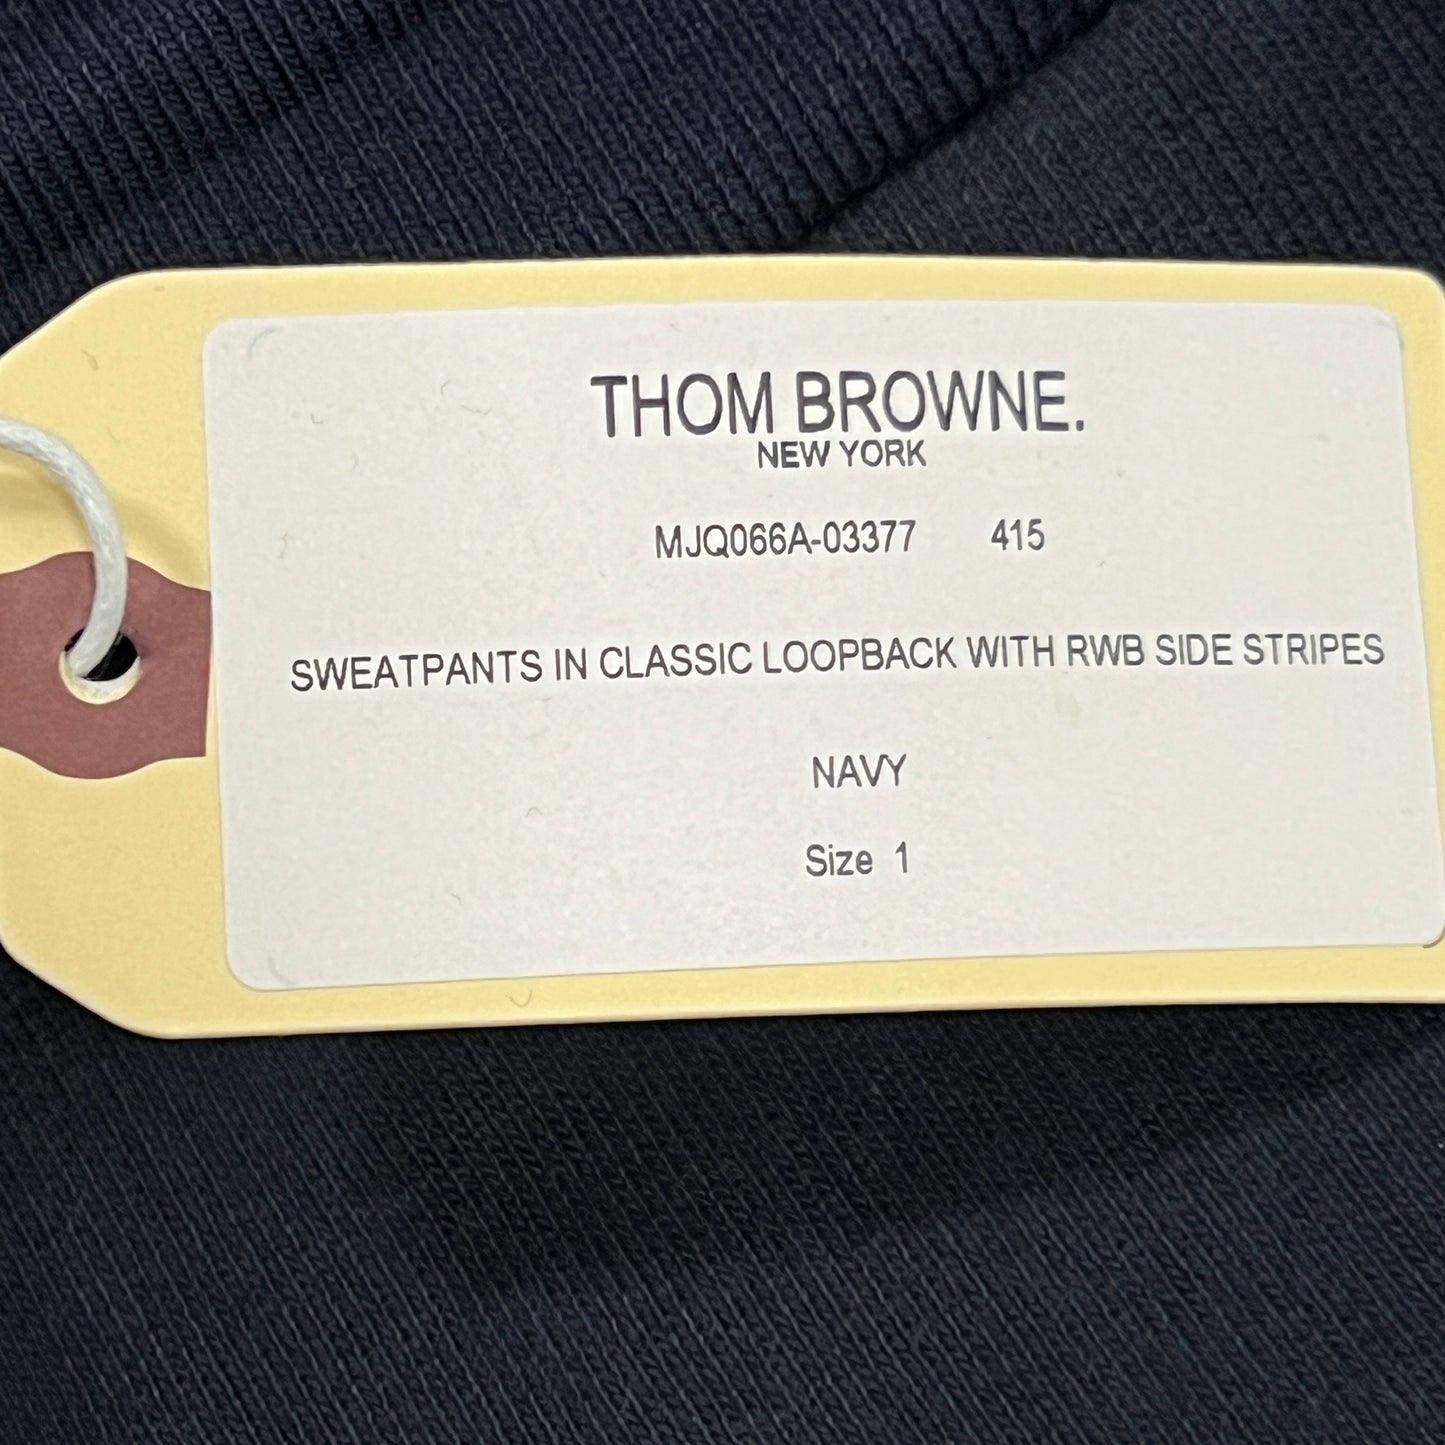 THOM BROWNE Sweatpants in Classic Loopback w/RWB Side Stripes Navy Size 1 (New)